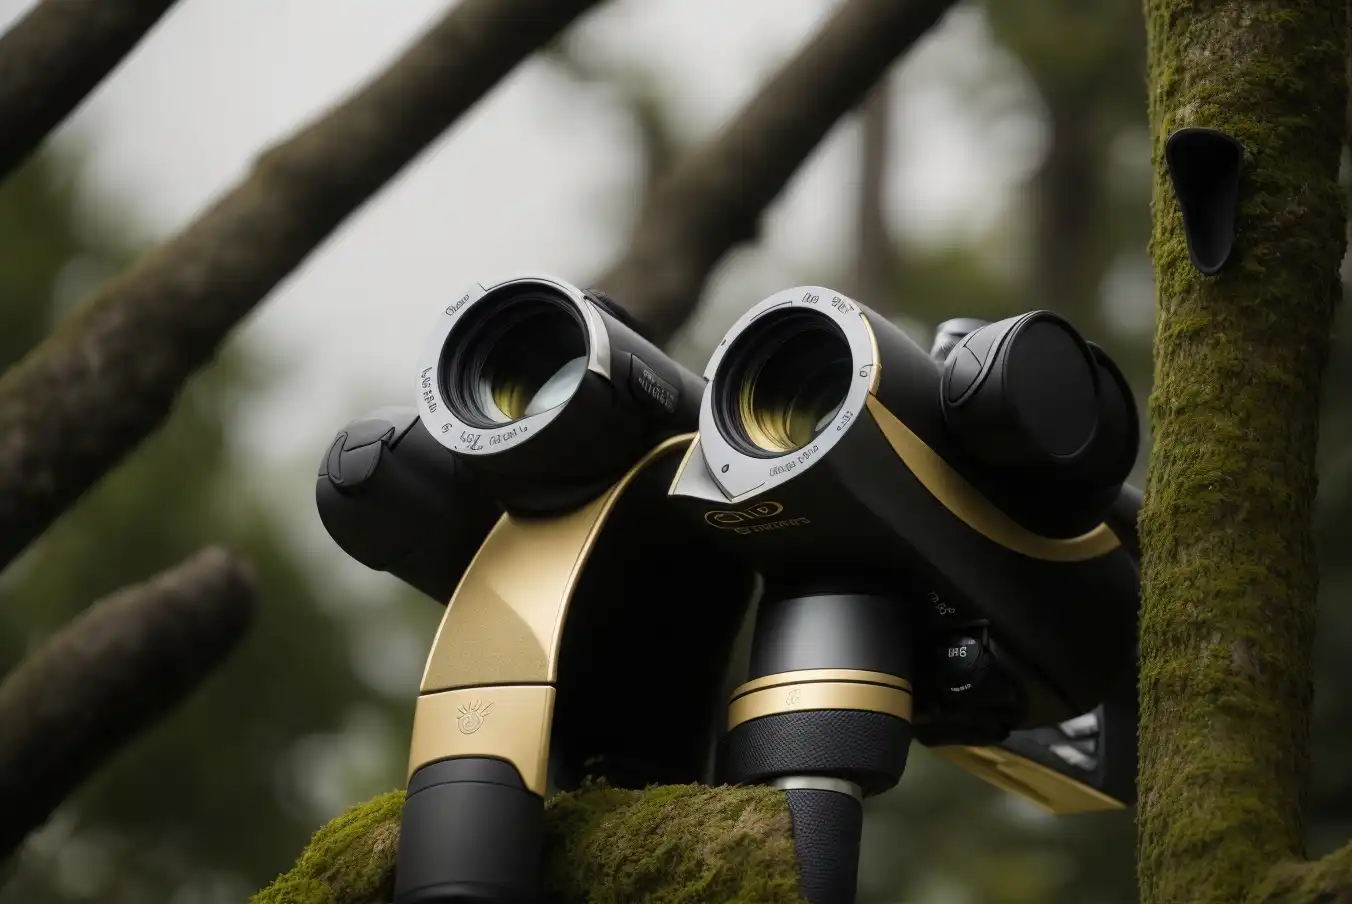 birdwatching binoculars